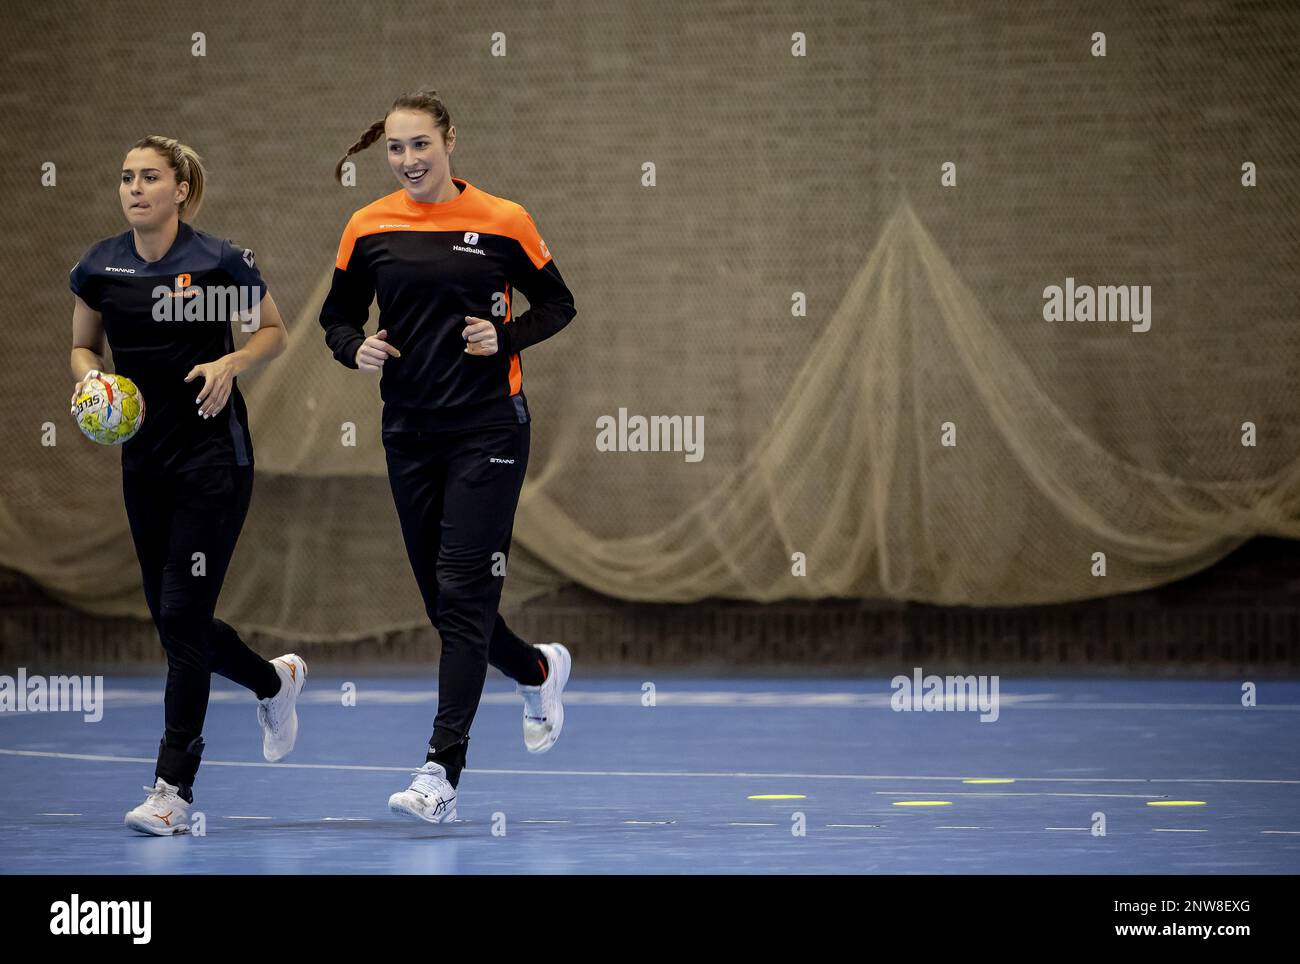 ARNHEM - Estavana Polman and Lois Abbingh of TeamNL Women's Handball during training leading up to the Golden League matches. ANP ROBIN VAN LONKHUIJSEN Stock Photo